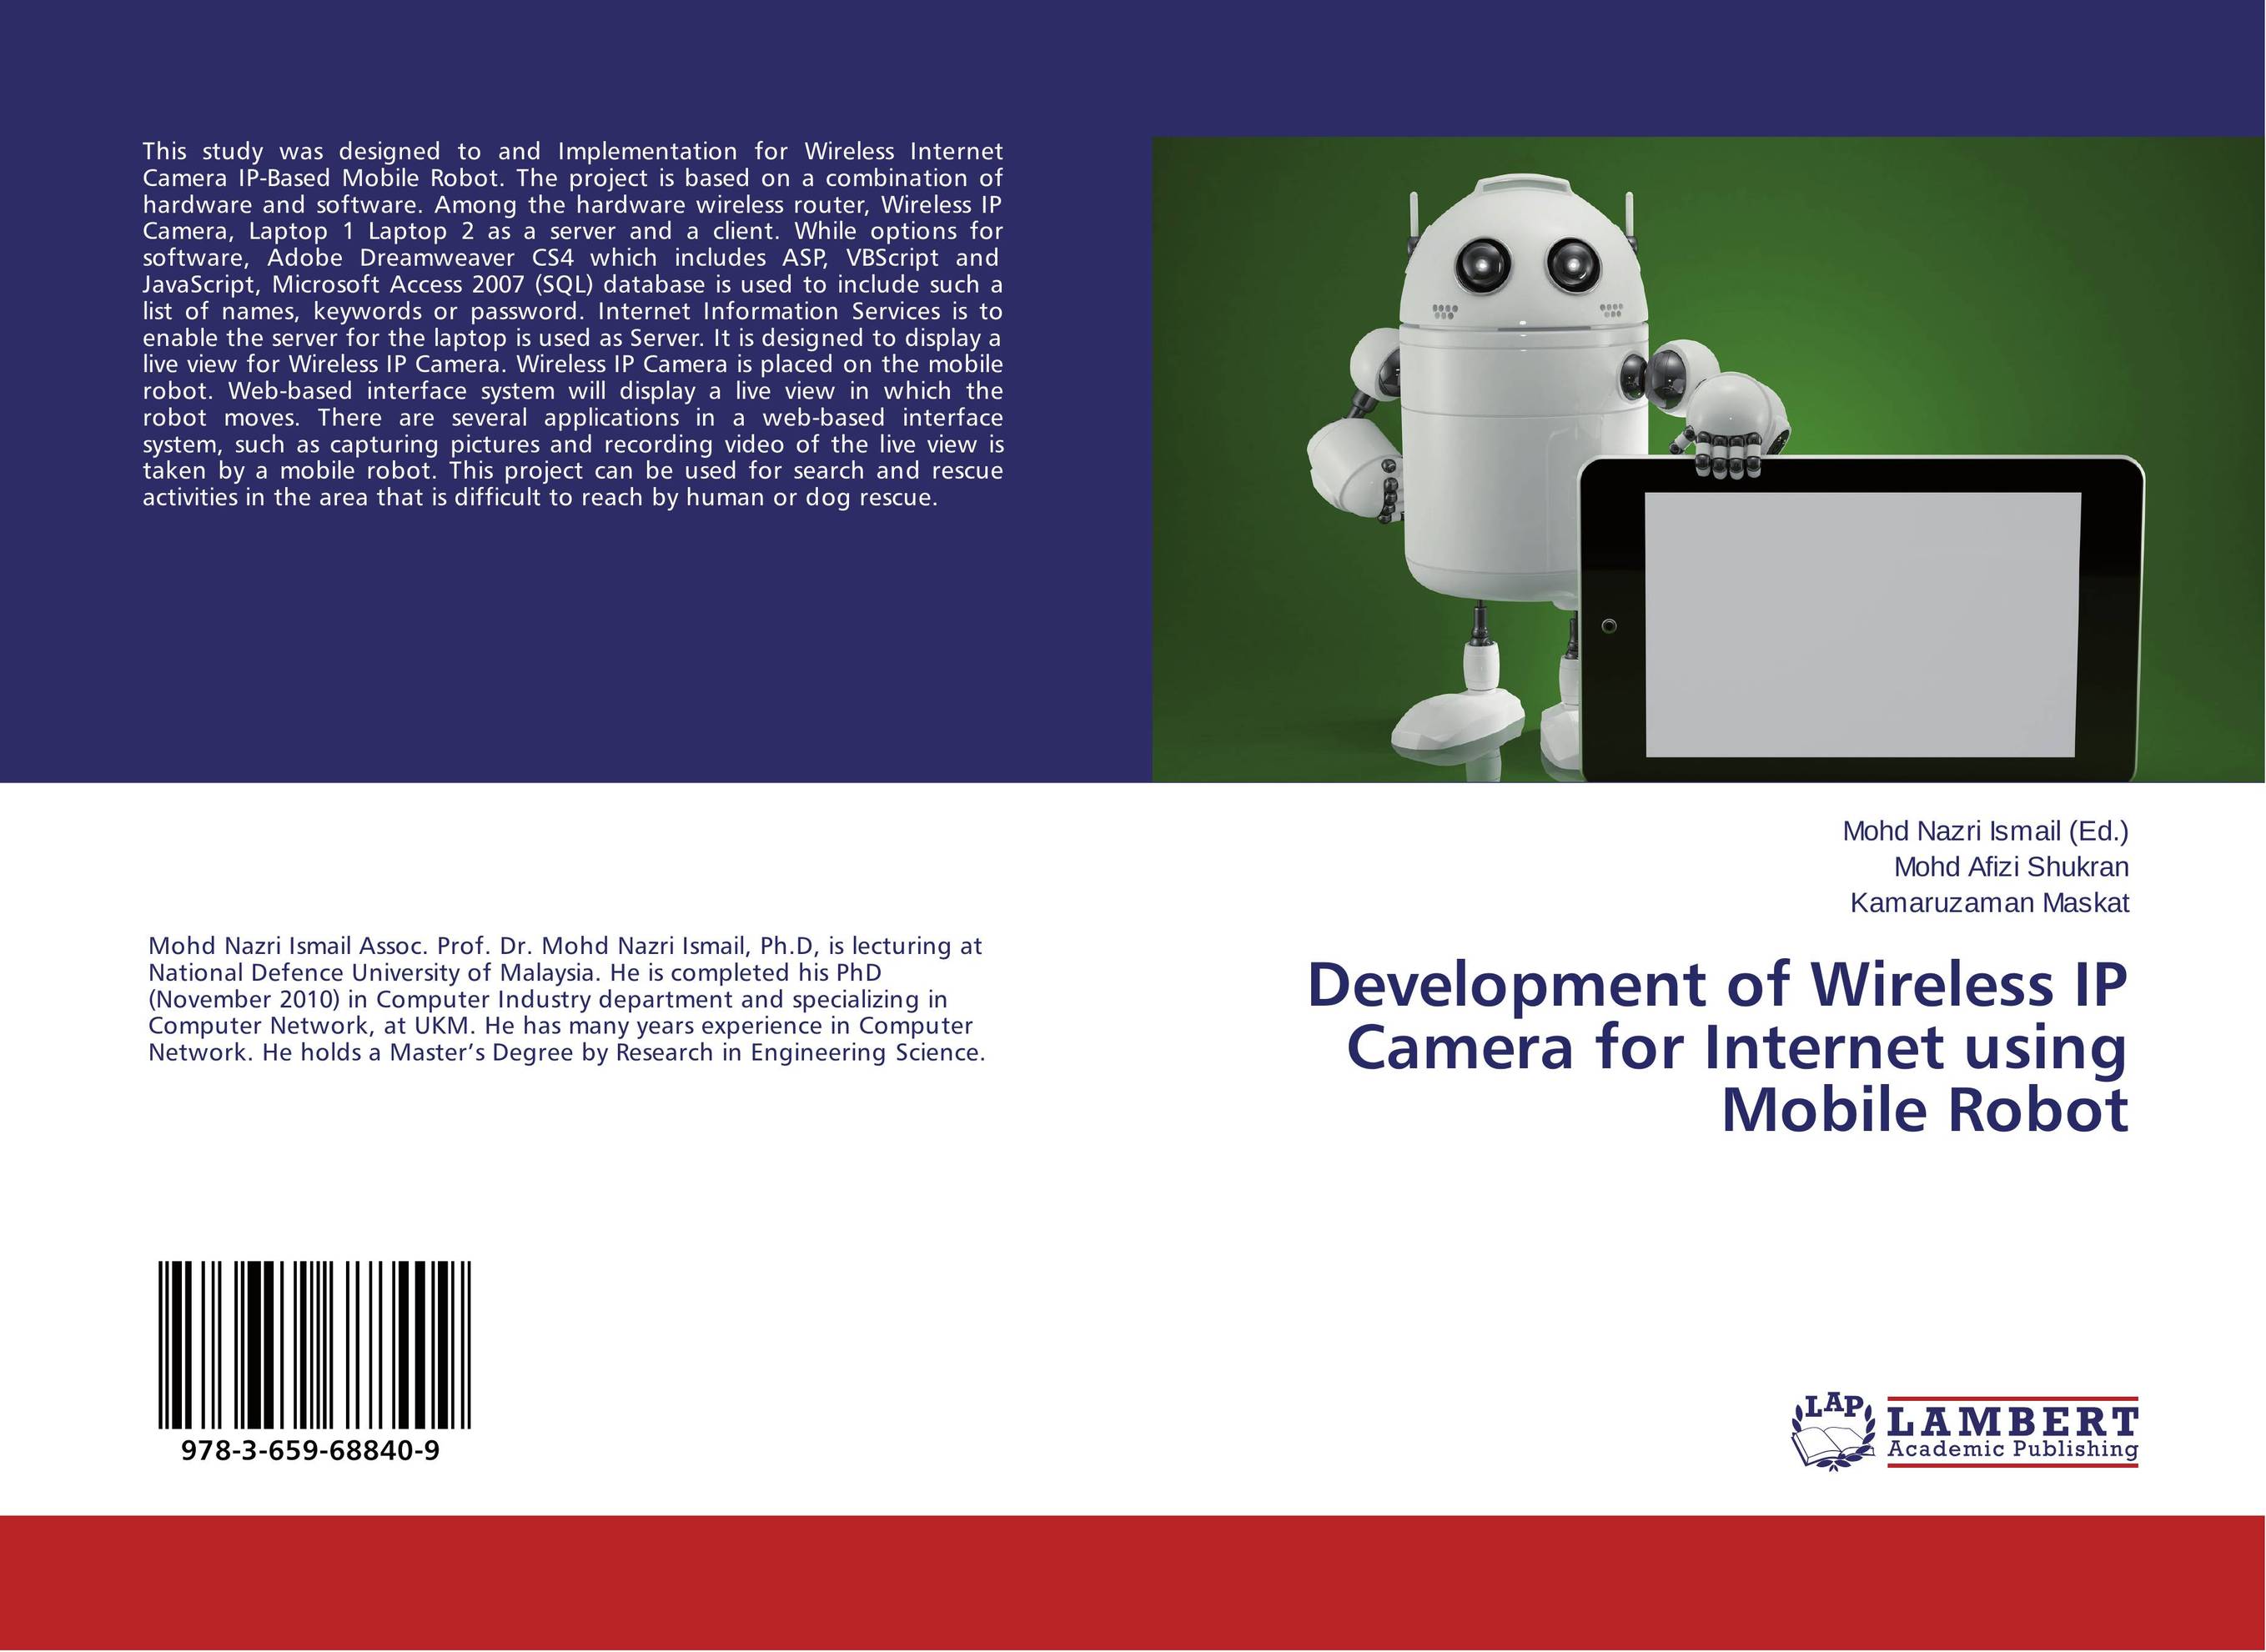 Development of Wireless IP Camera for Internet using Mobile Robot